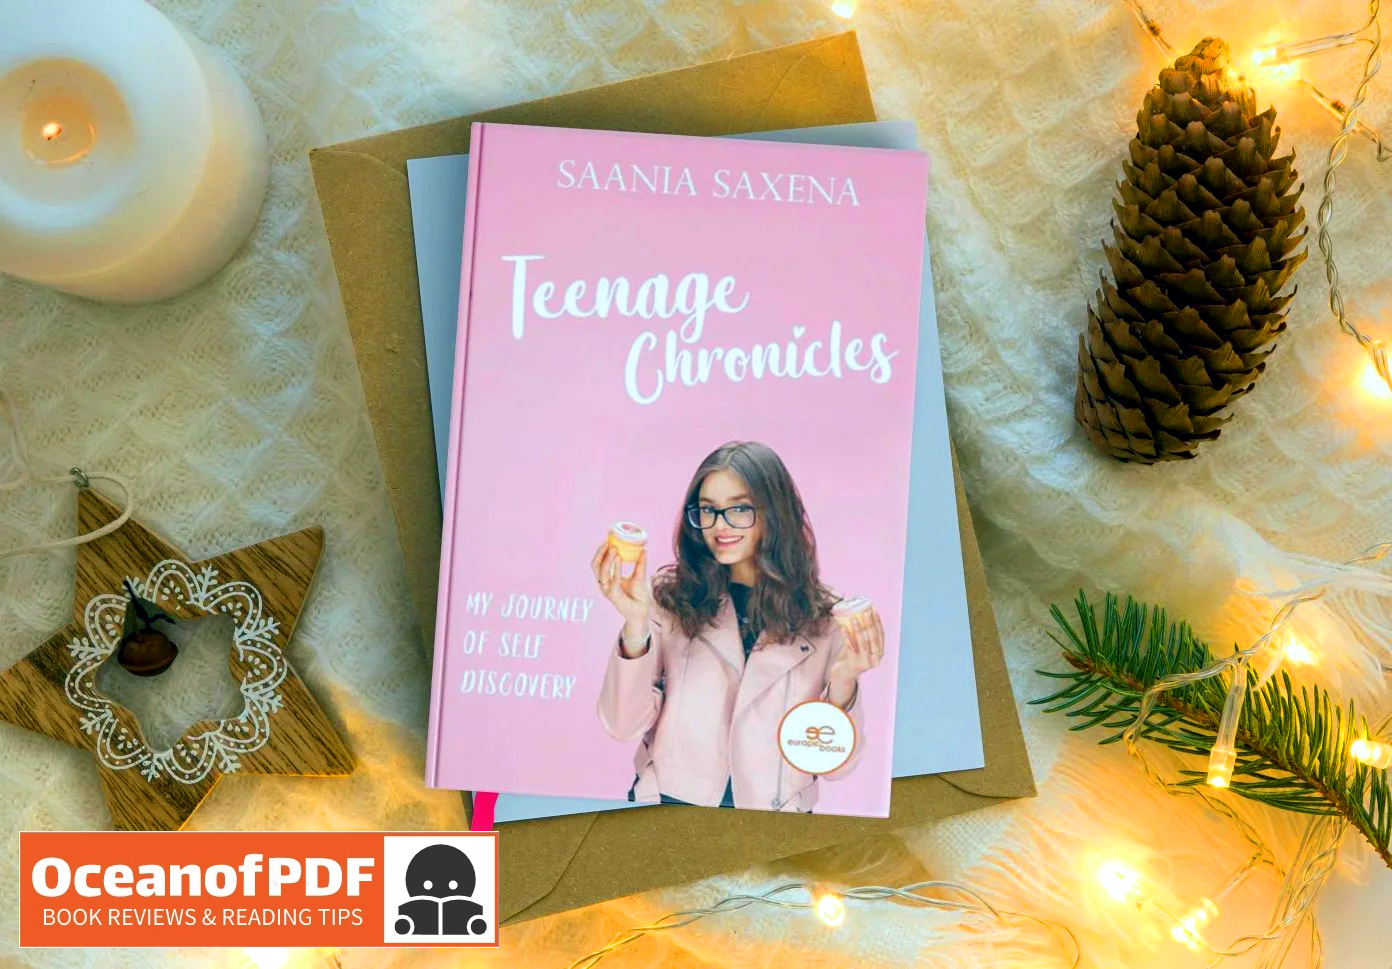 Teenage Chronicles by Saania Saxena